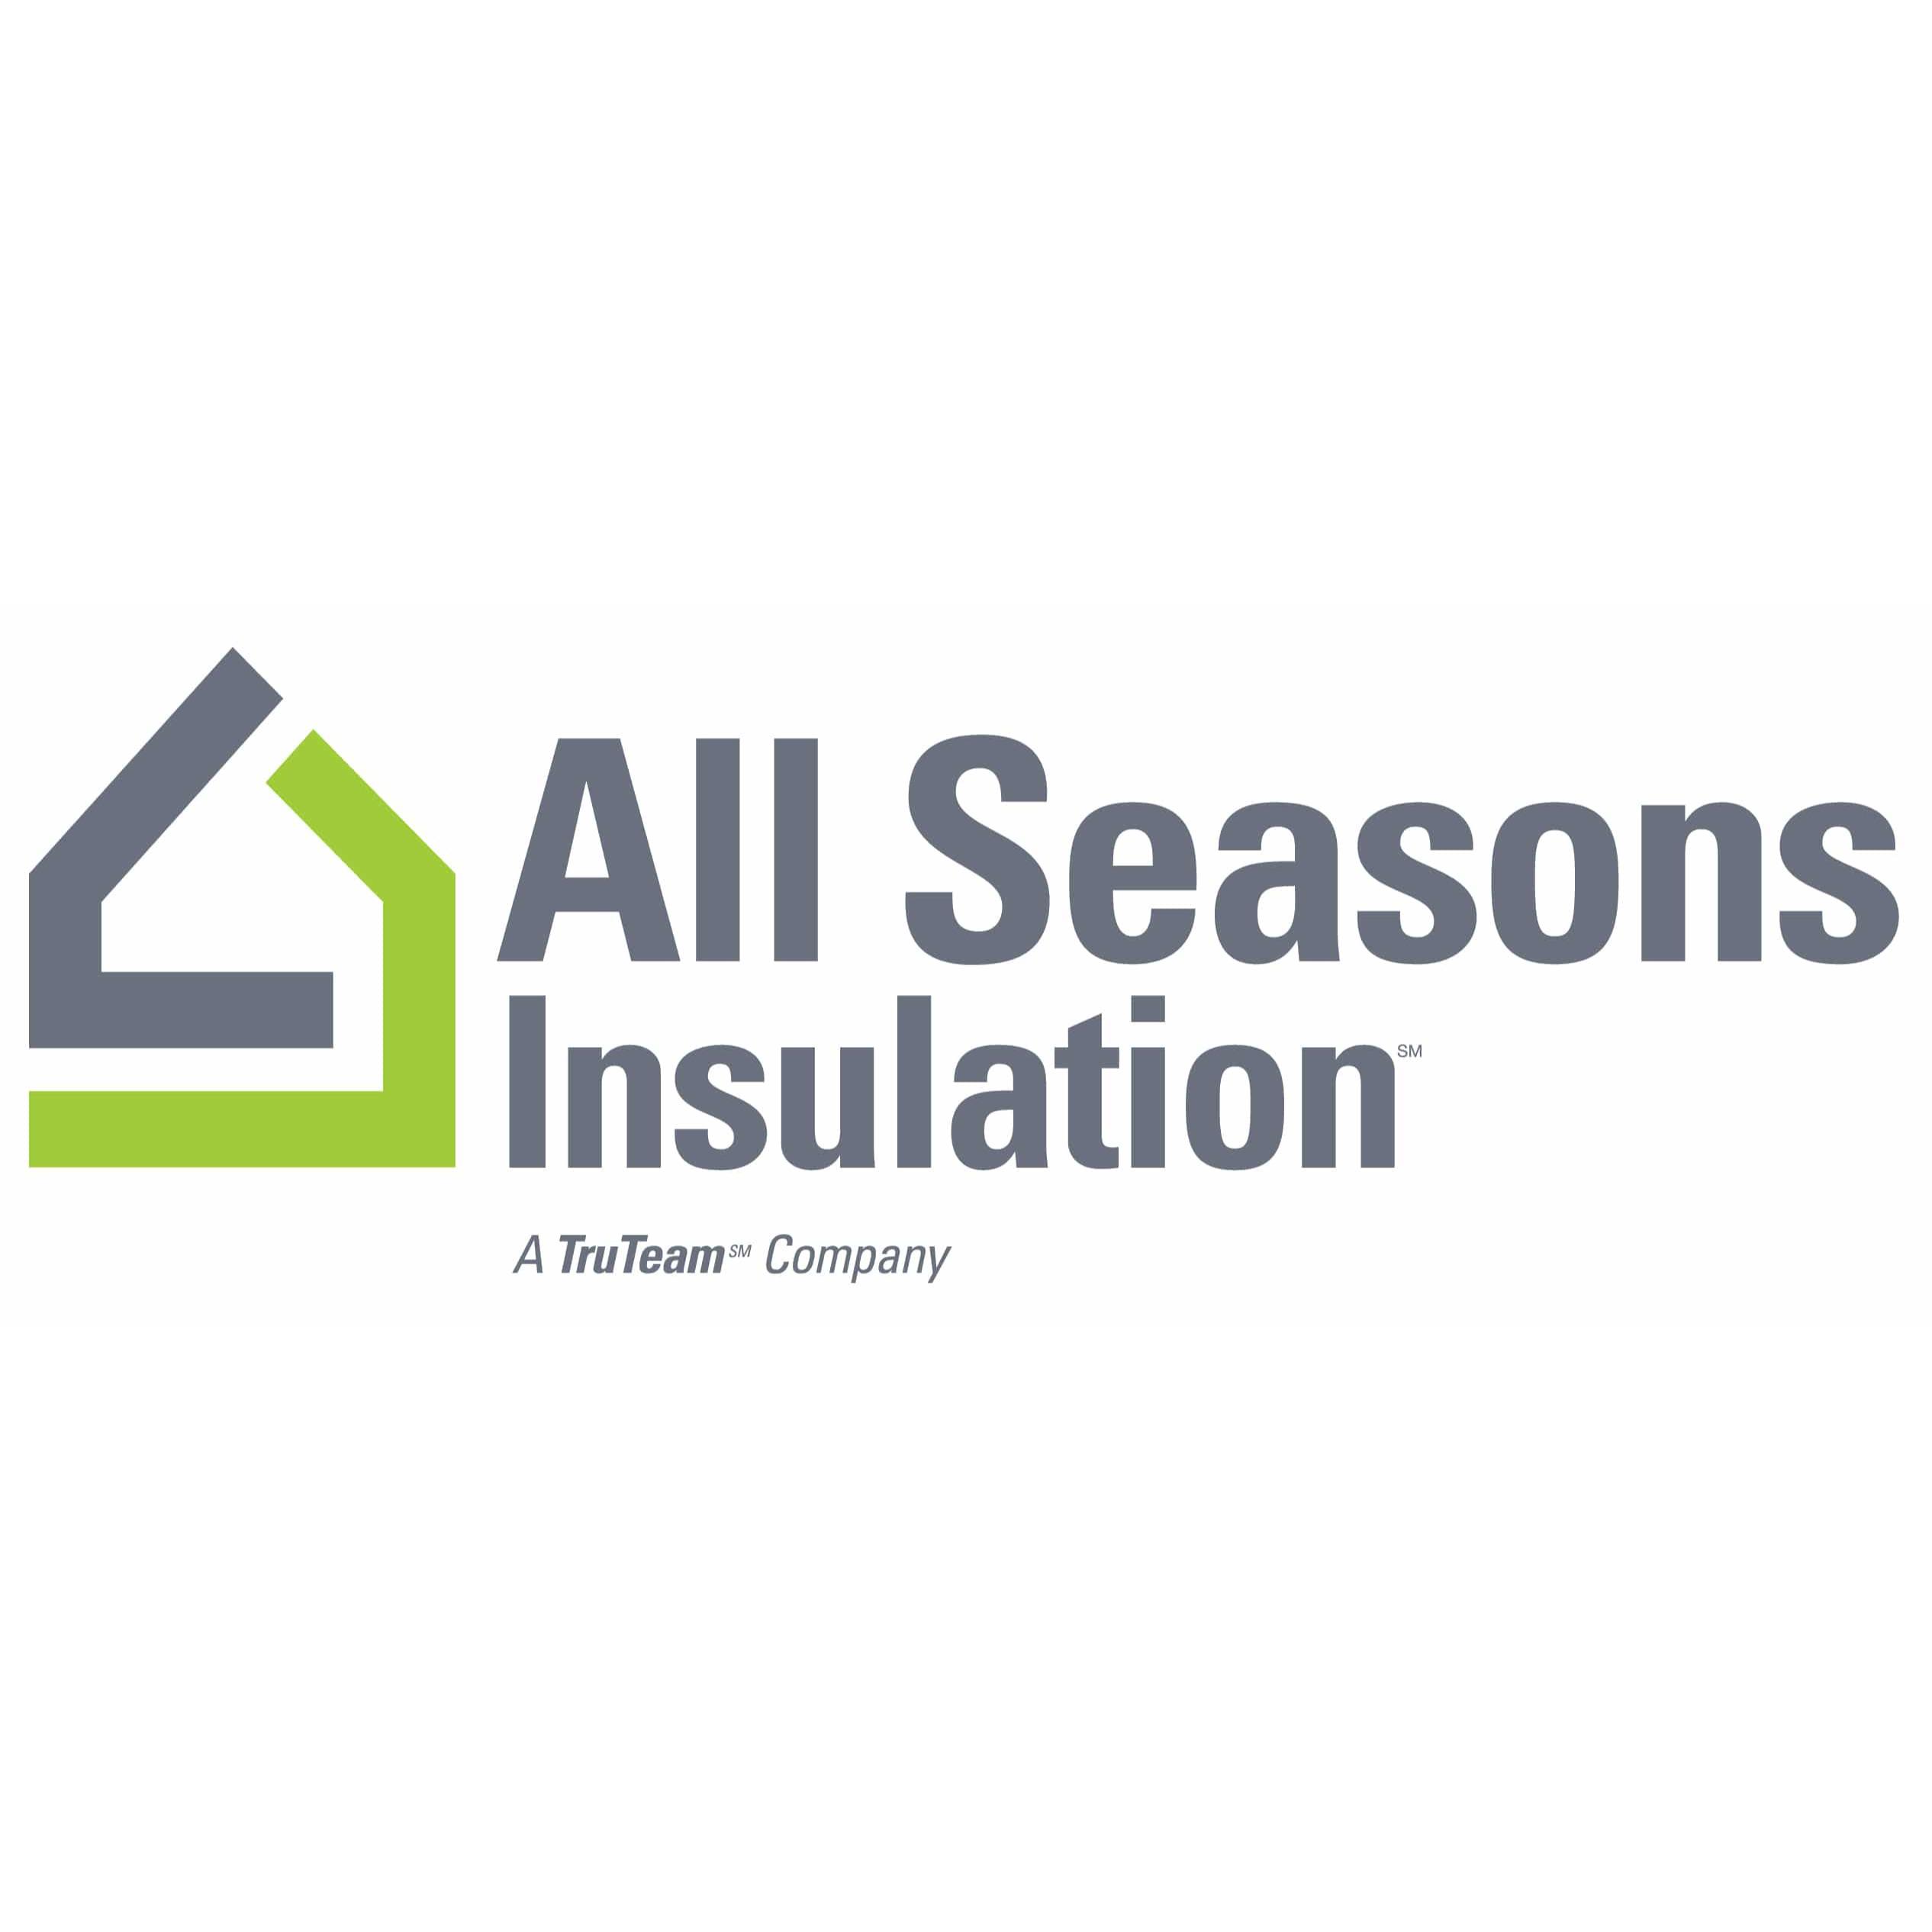 All Seasons Insulation - Johnson City, TN 37604 - (423)926-8234 | ShowMeLocal.com